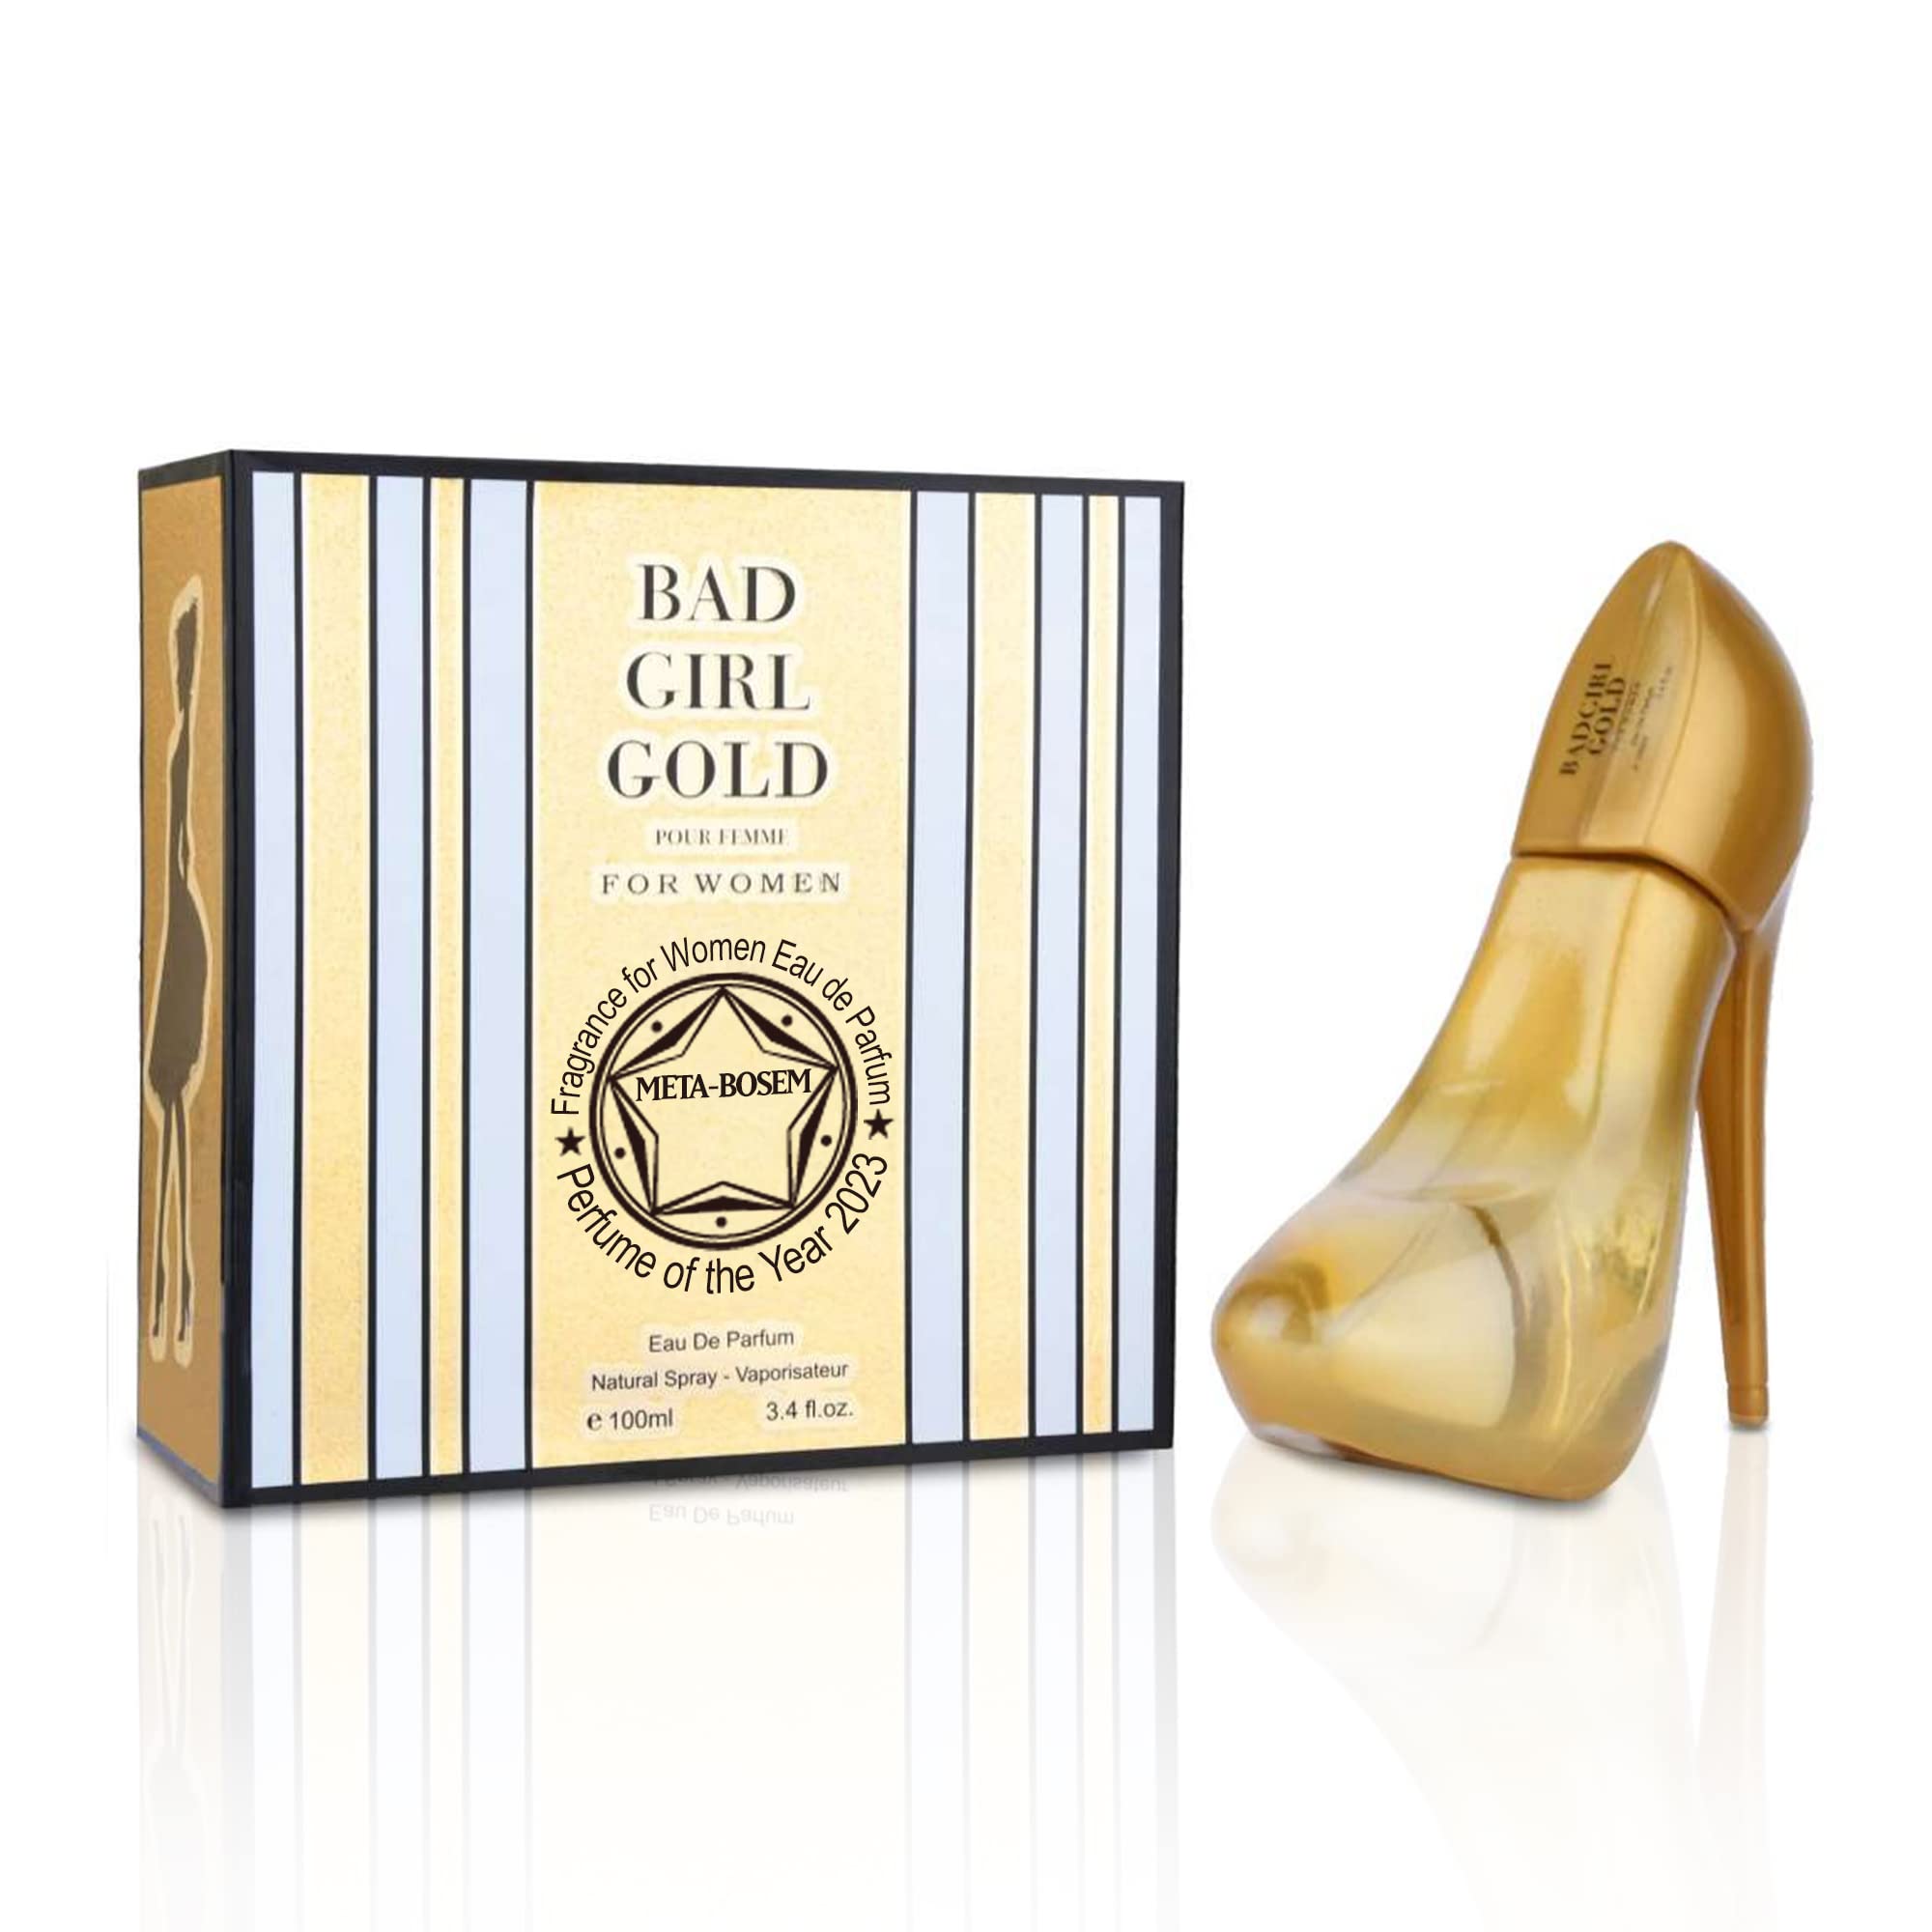 META-BOSEM 5-Pc Set Perfume Collection for Women Girl's High Heel Shoe Shaped Fancy Bottle Fragrance, Eau de Parfum Natural Spray - Fresh Feminine Scent (Pack of 5) Each 3.4 Fl Oz, Total 17.0 Fl Oz